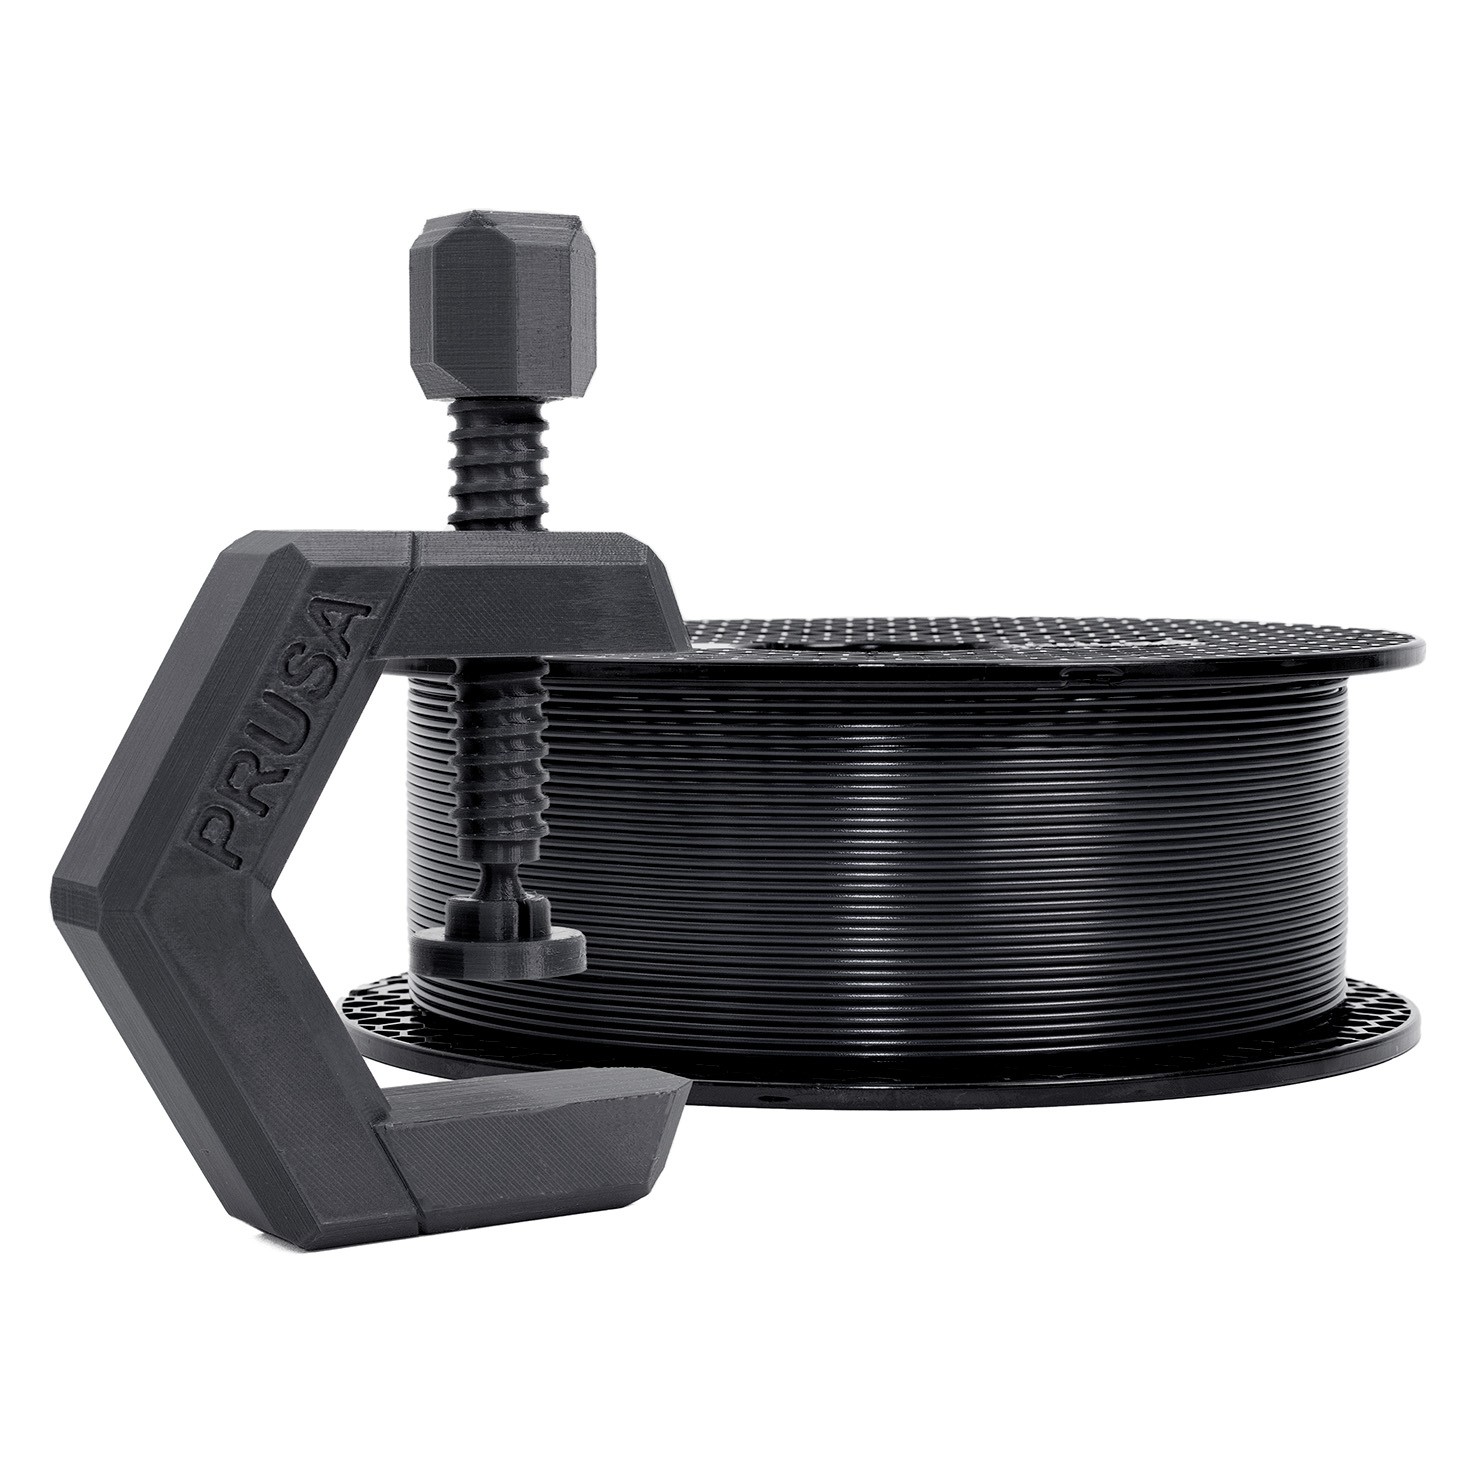 Prusament PETG Matte Black 1kg  Original Prusa 3D printers directly from  Josef Prusa